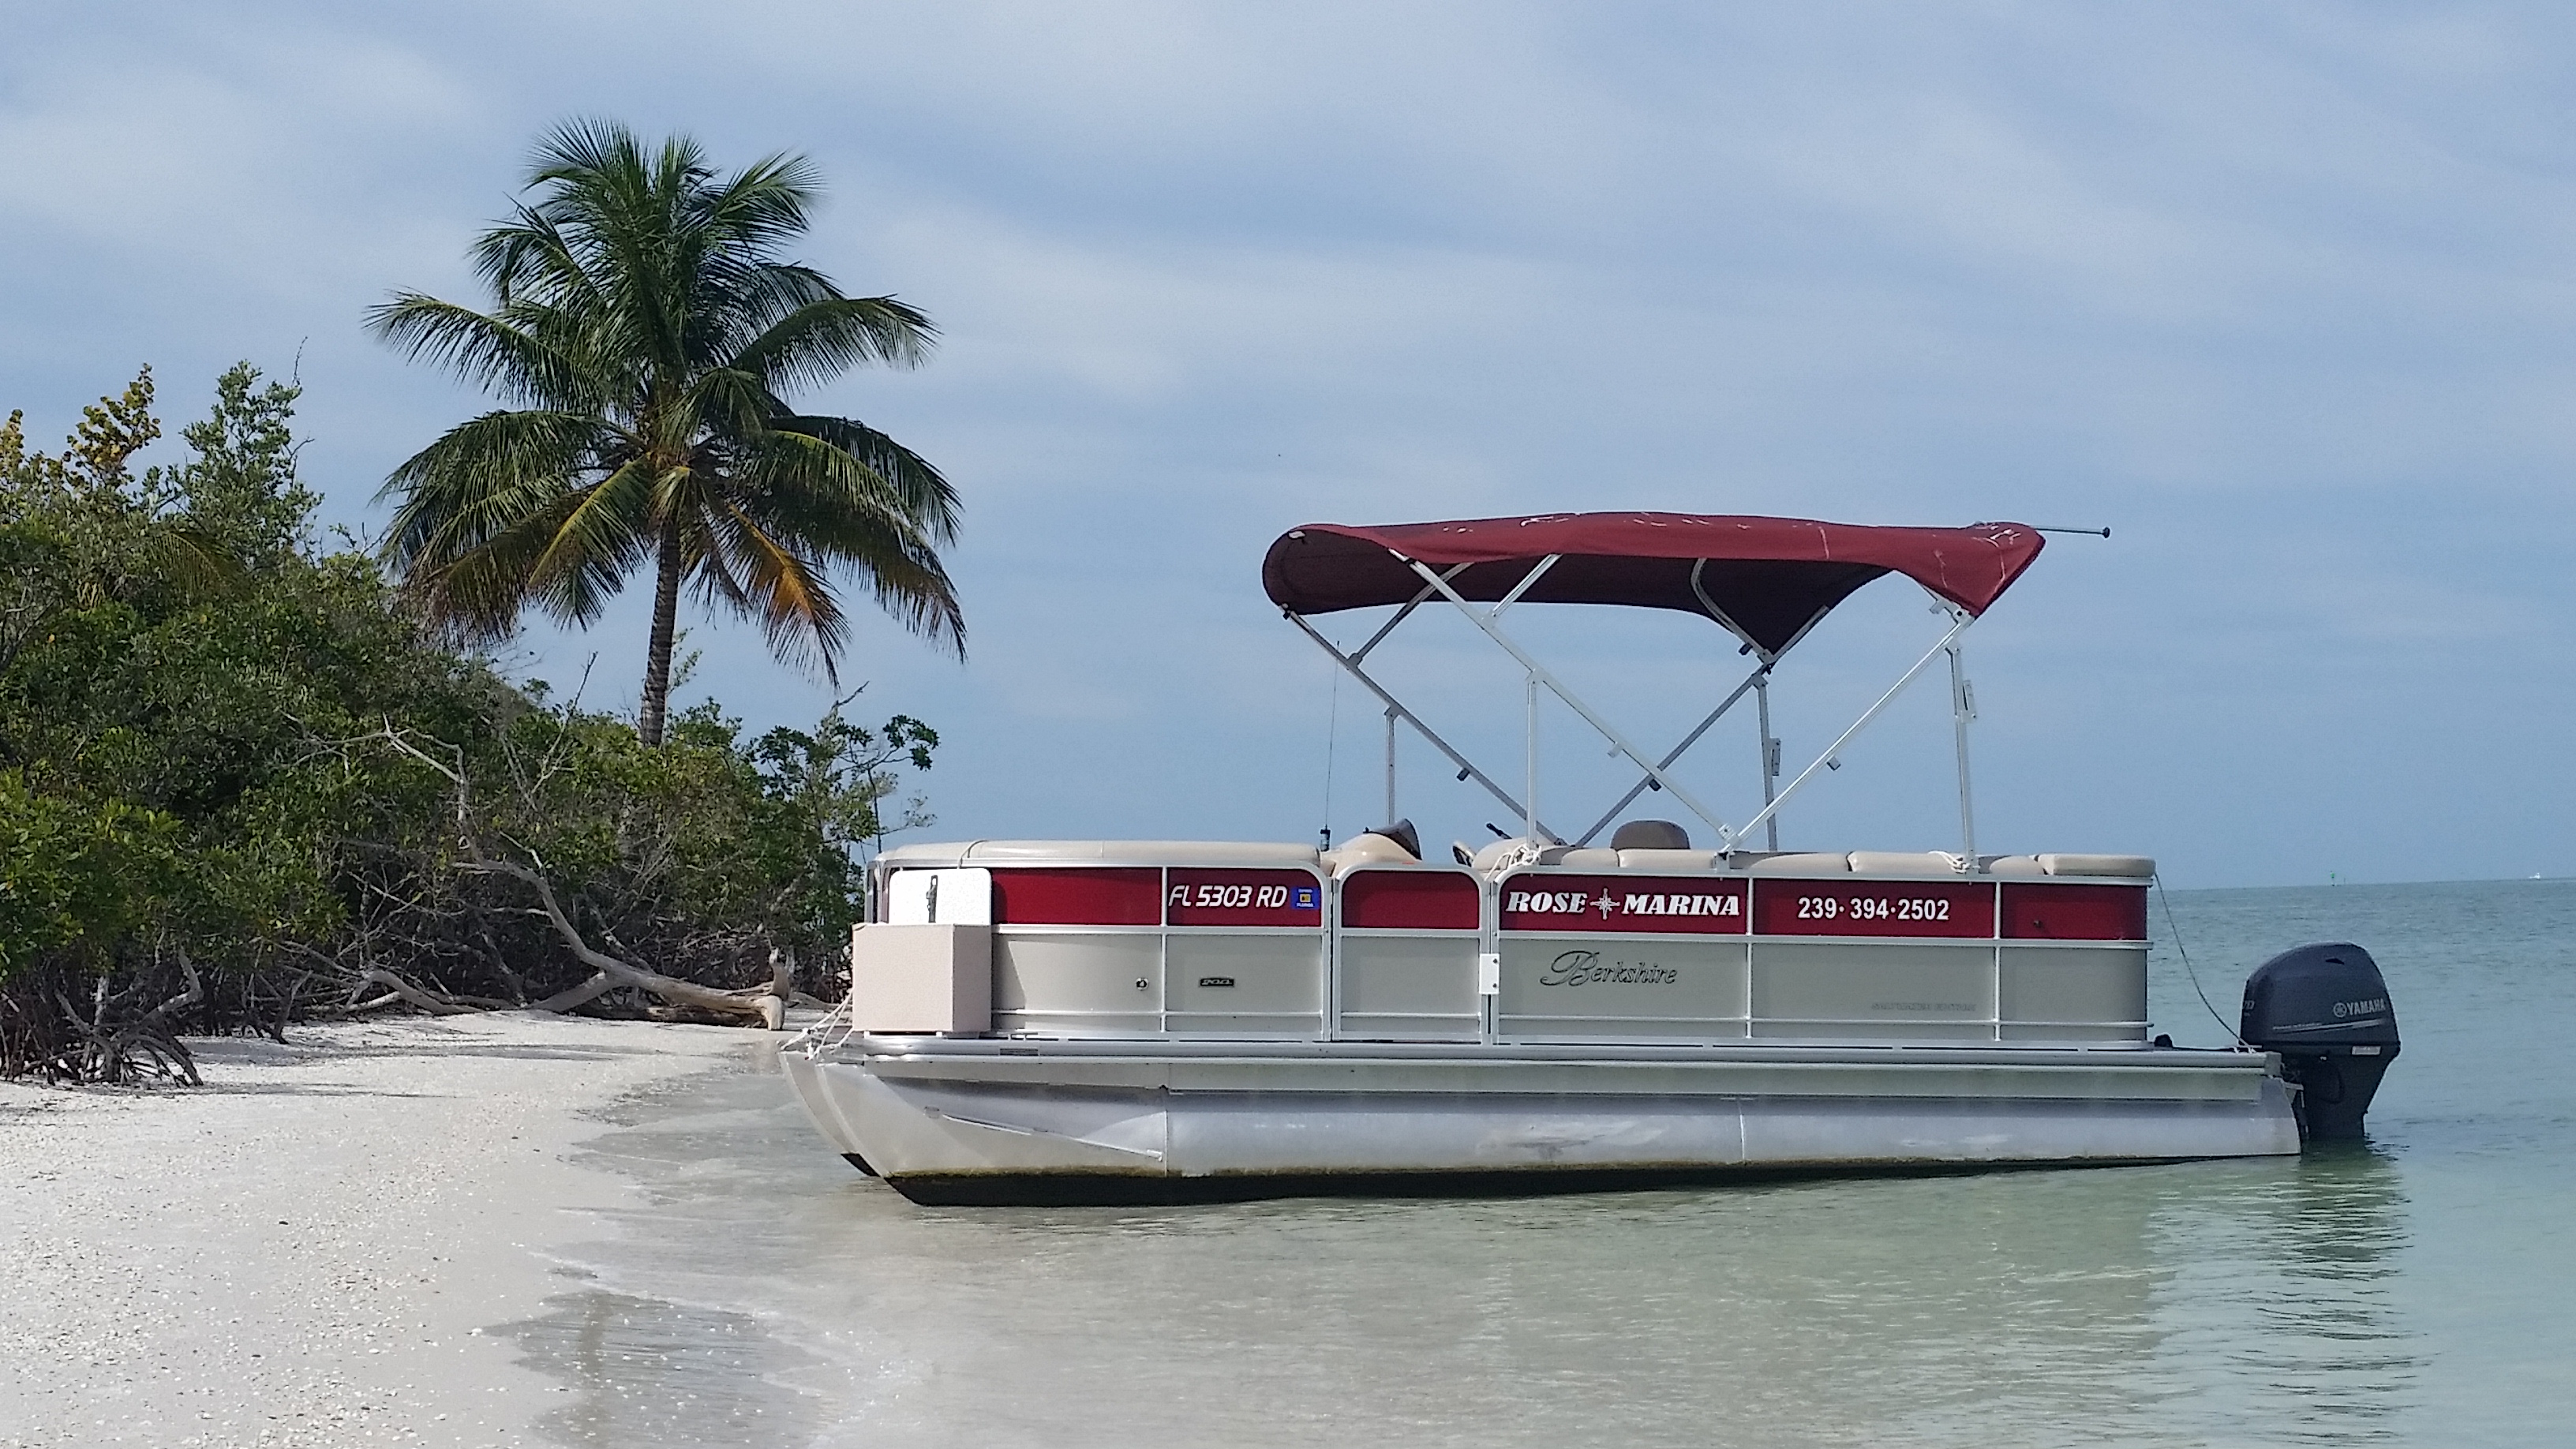 Rental Boats - Rose Marina - Marco Island, Florida